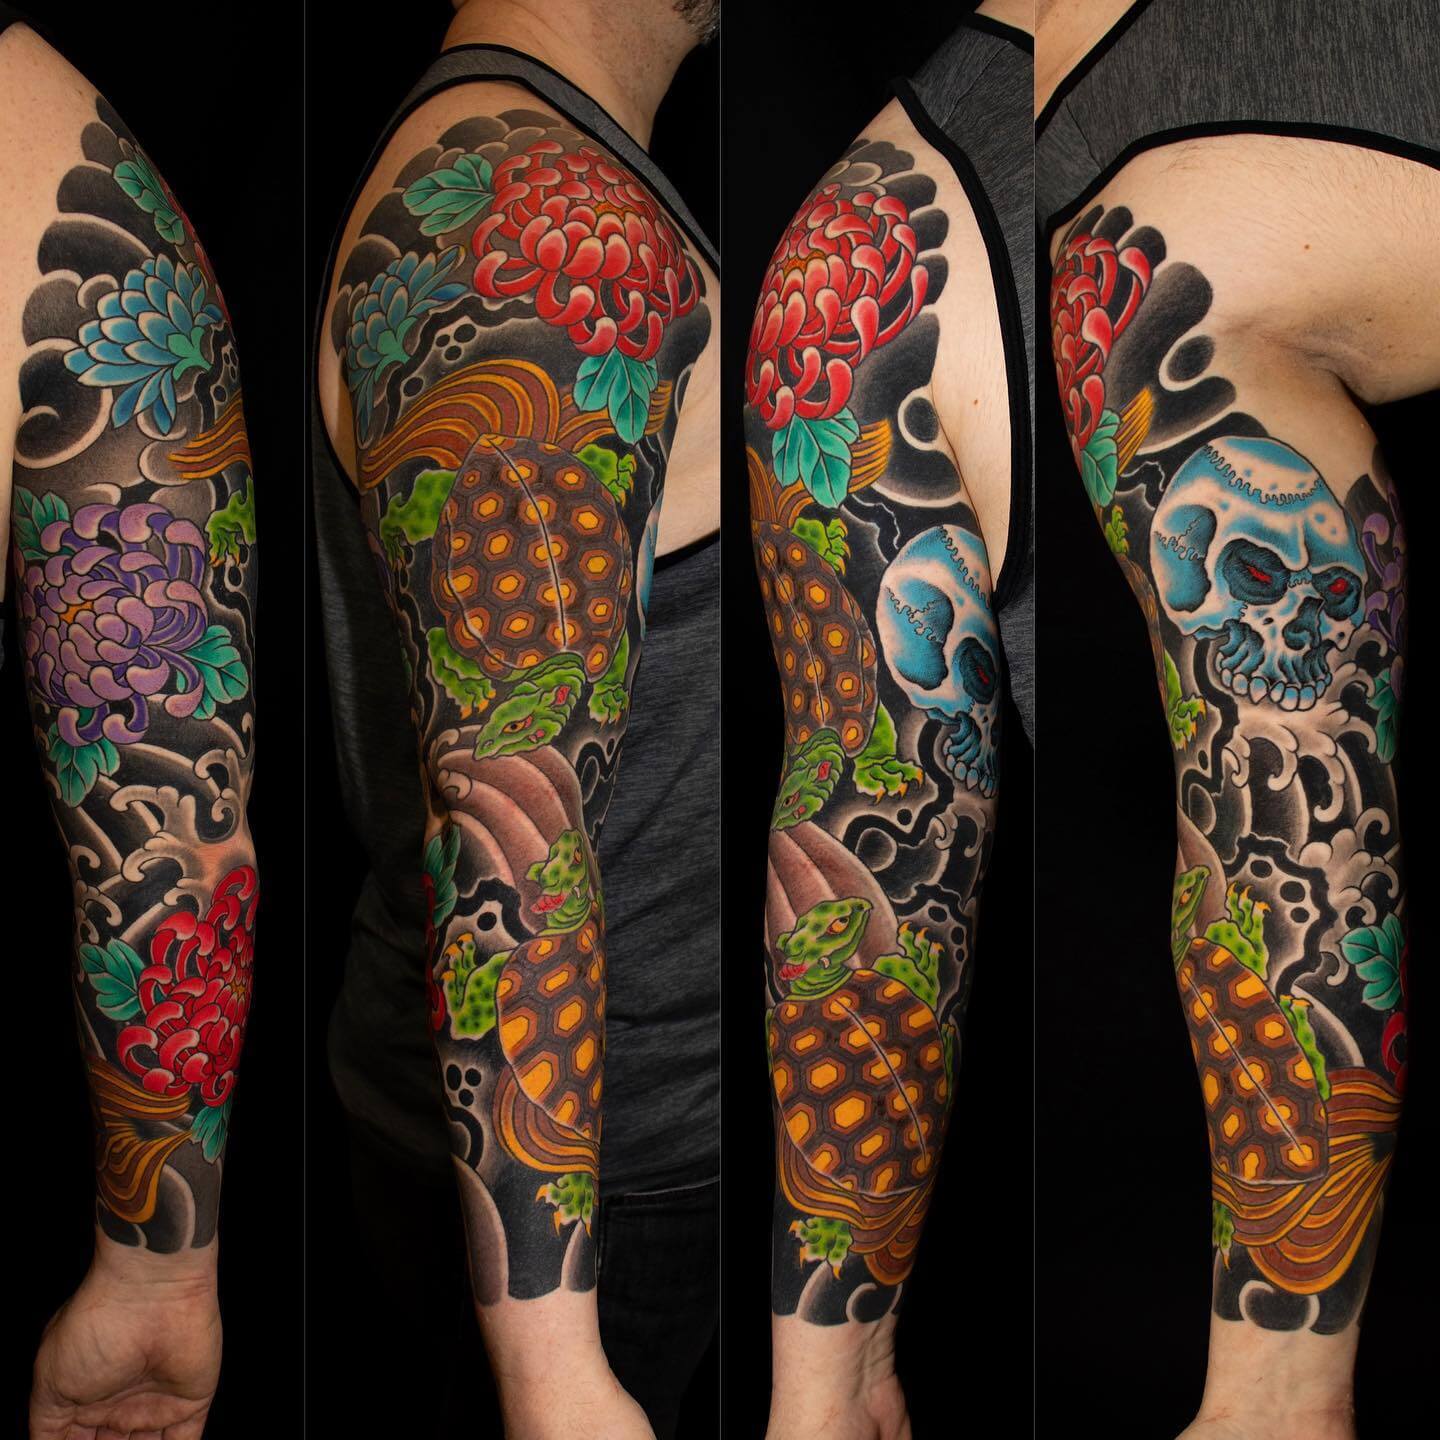 Japanese style tattoo sleeve ideas for men